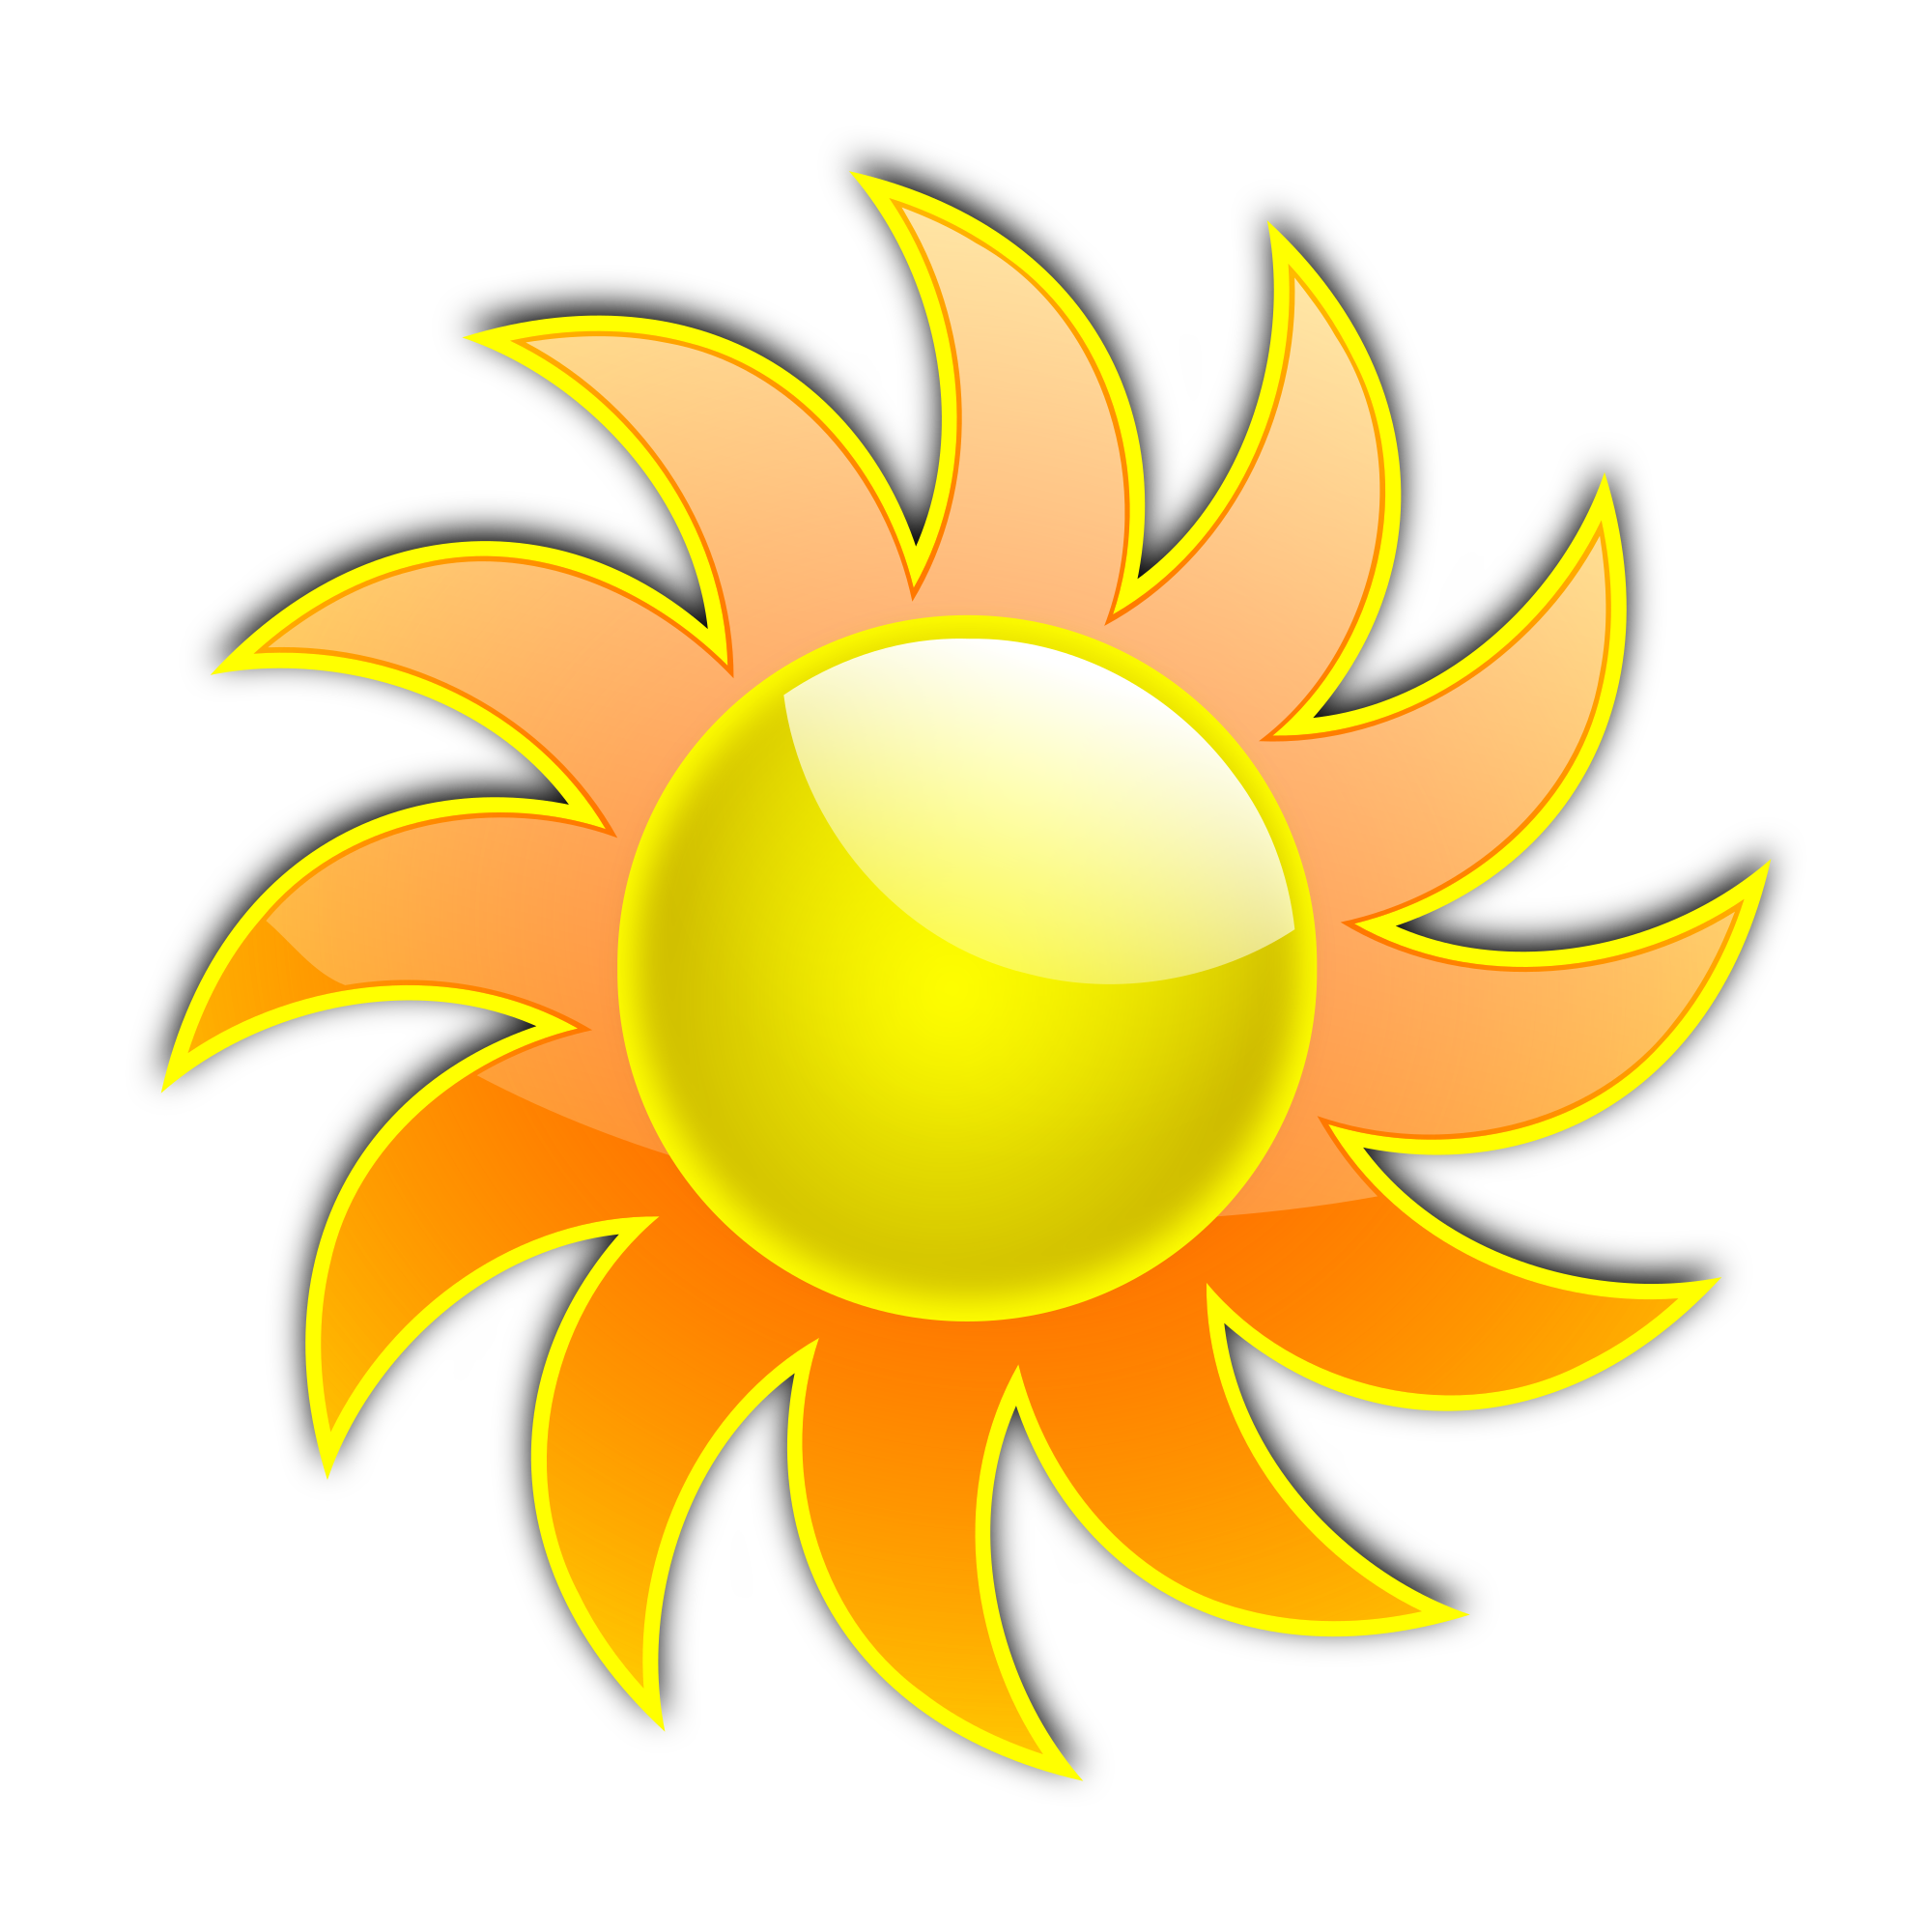 Sunshine free sun clipart public domain sun clip art images and 4 9